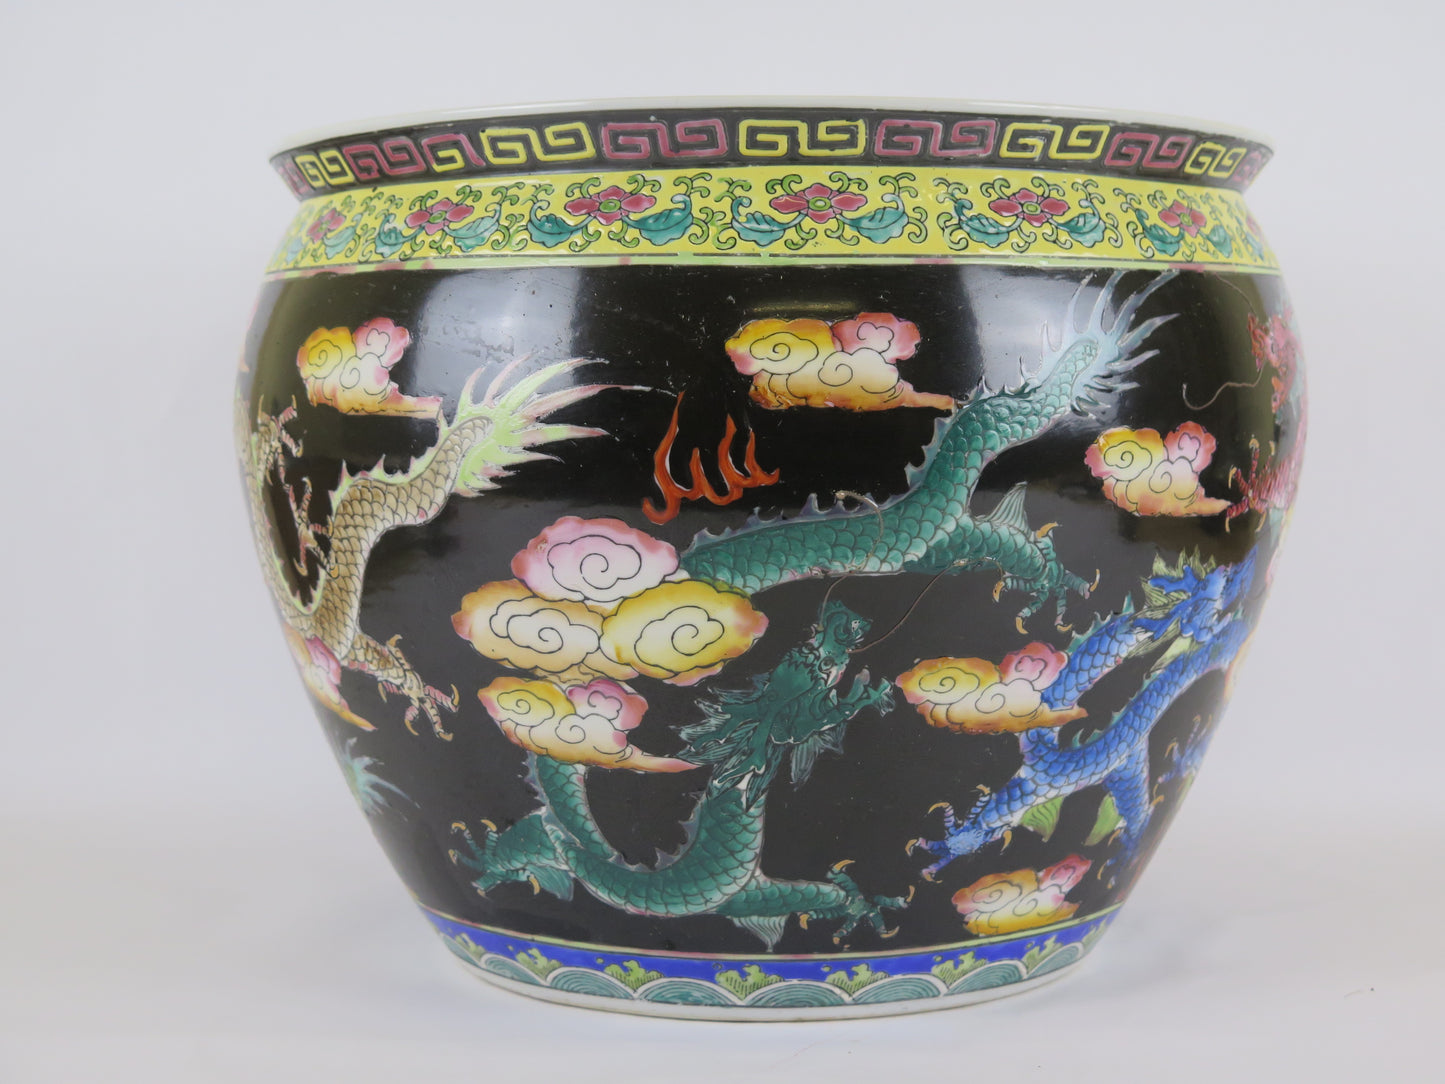 Large ceramic vase cachepot cache-pot cache pot hand-painted ceramic vase China Asia Chinese CM6